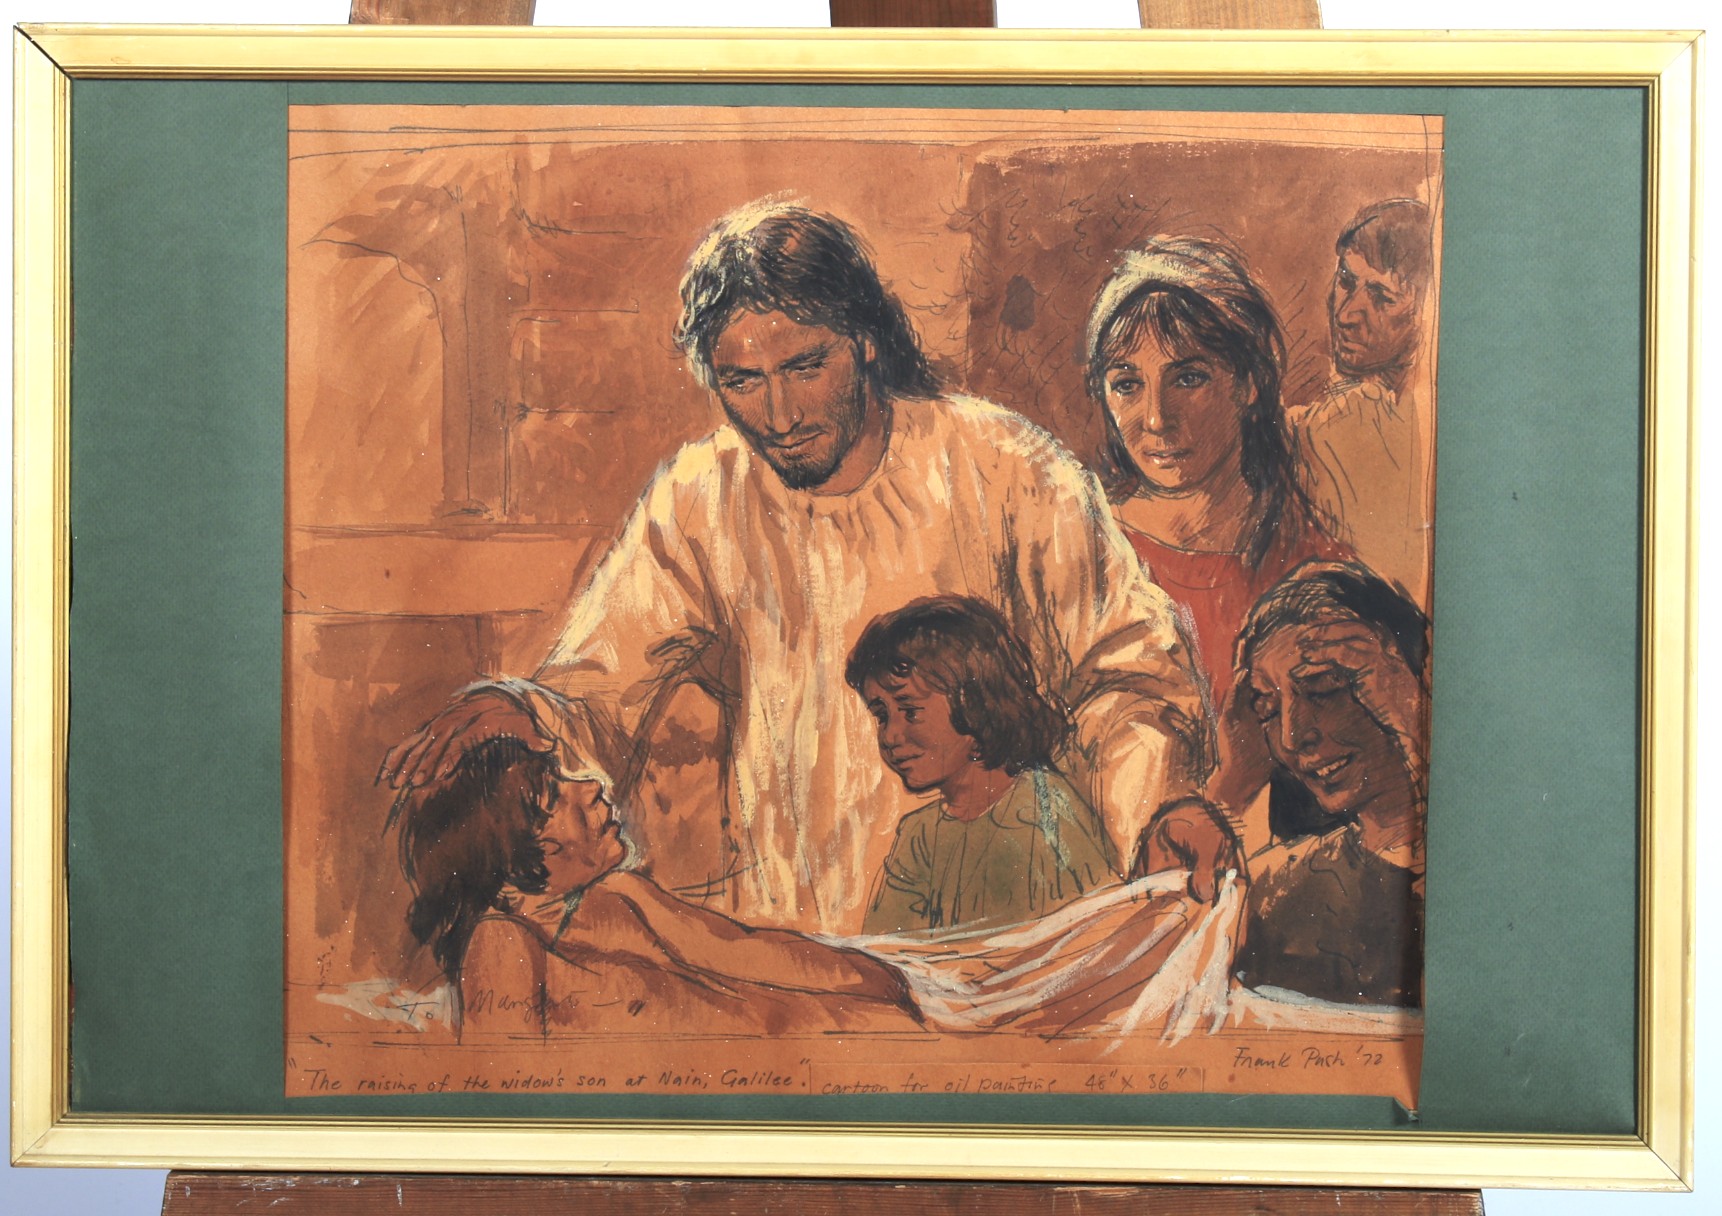 Frank Pash (Australian, 1920-1990), The Raising of the Widow's Son at Nain, Galilee,